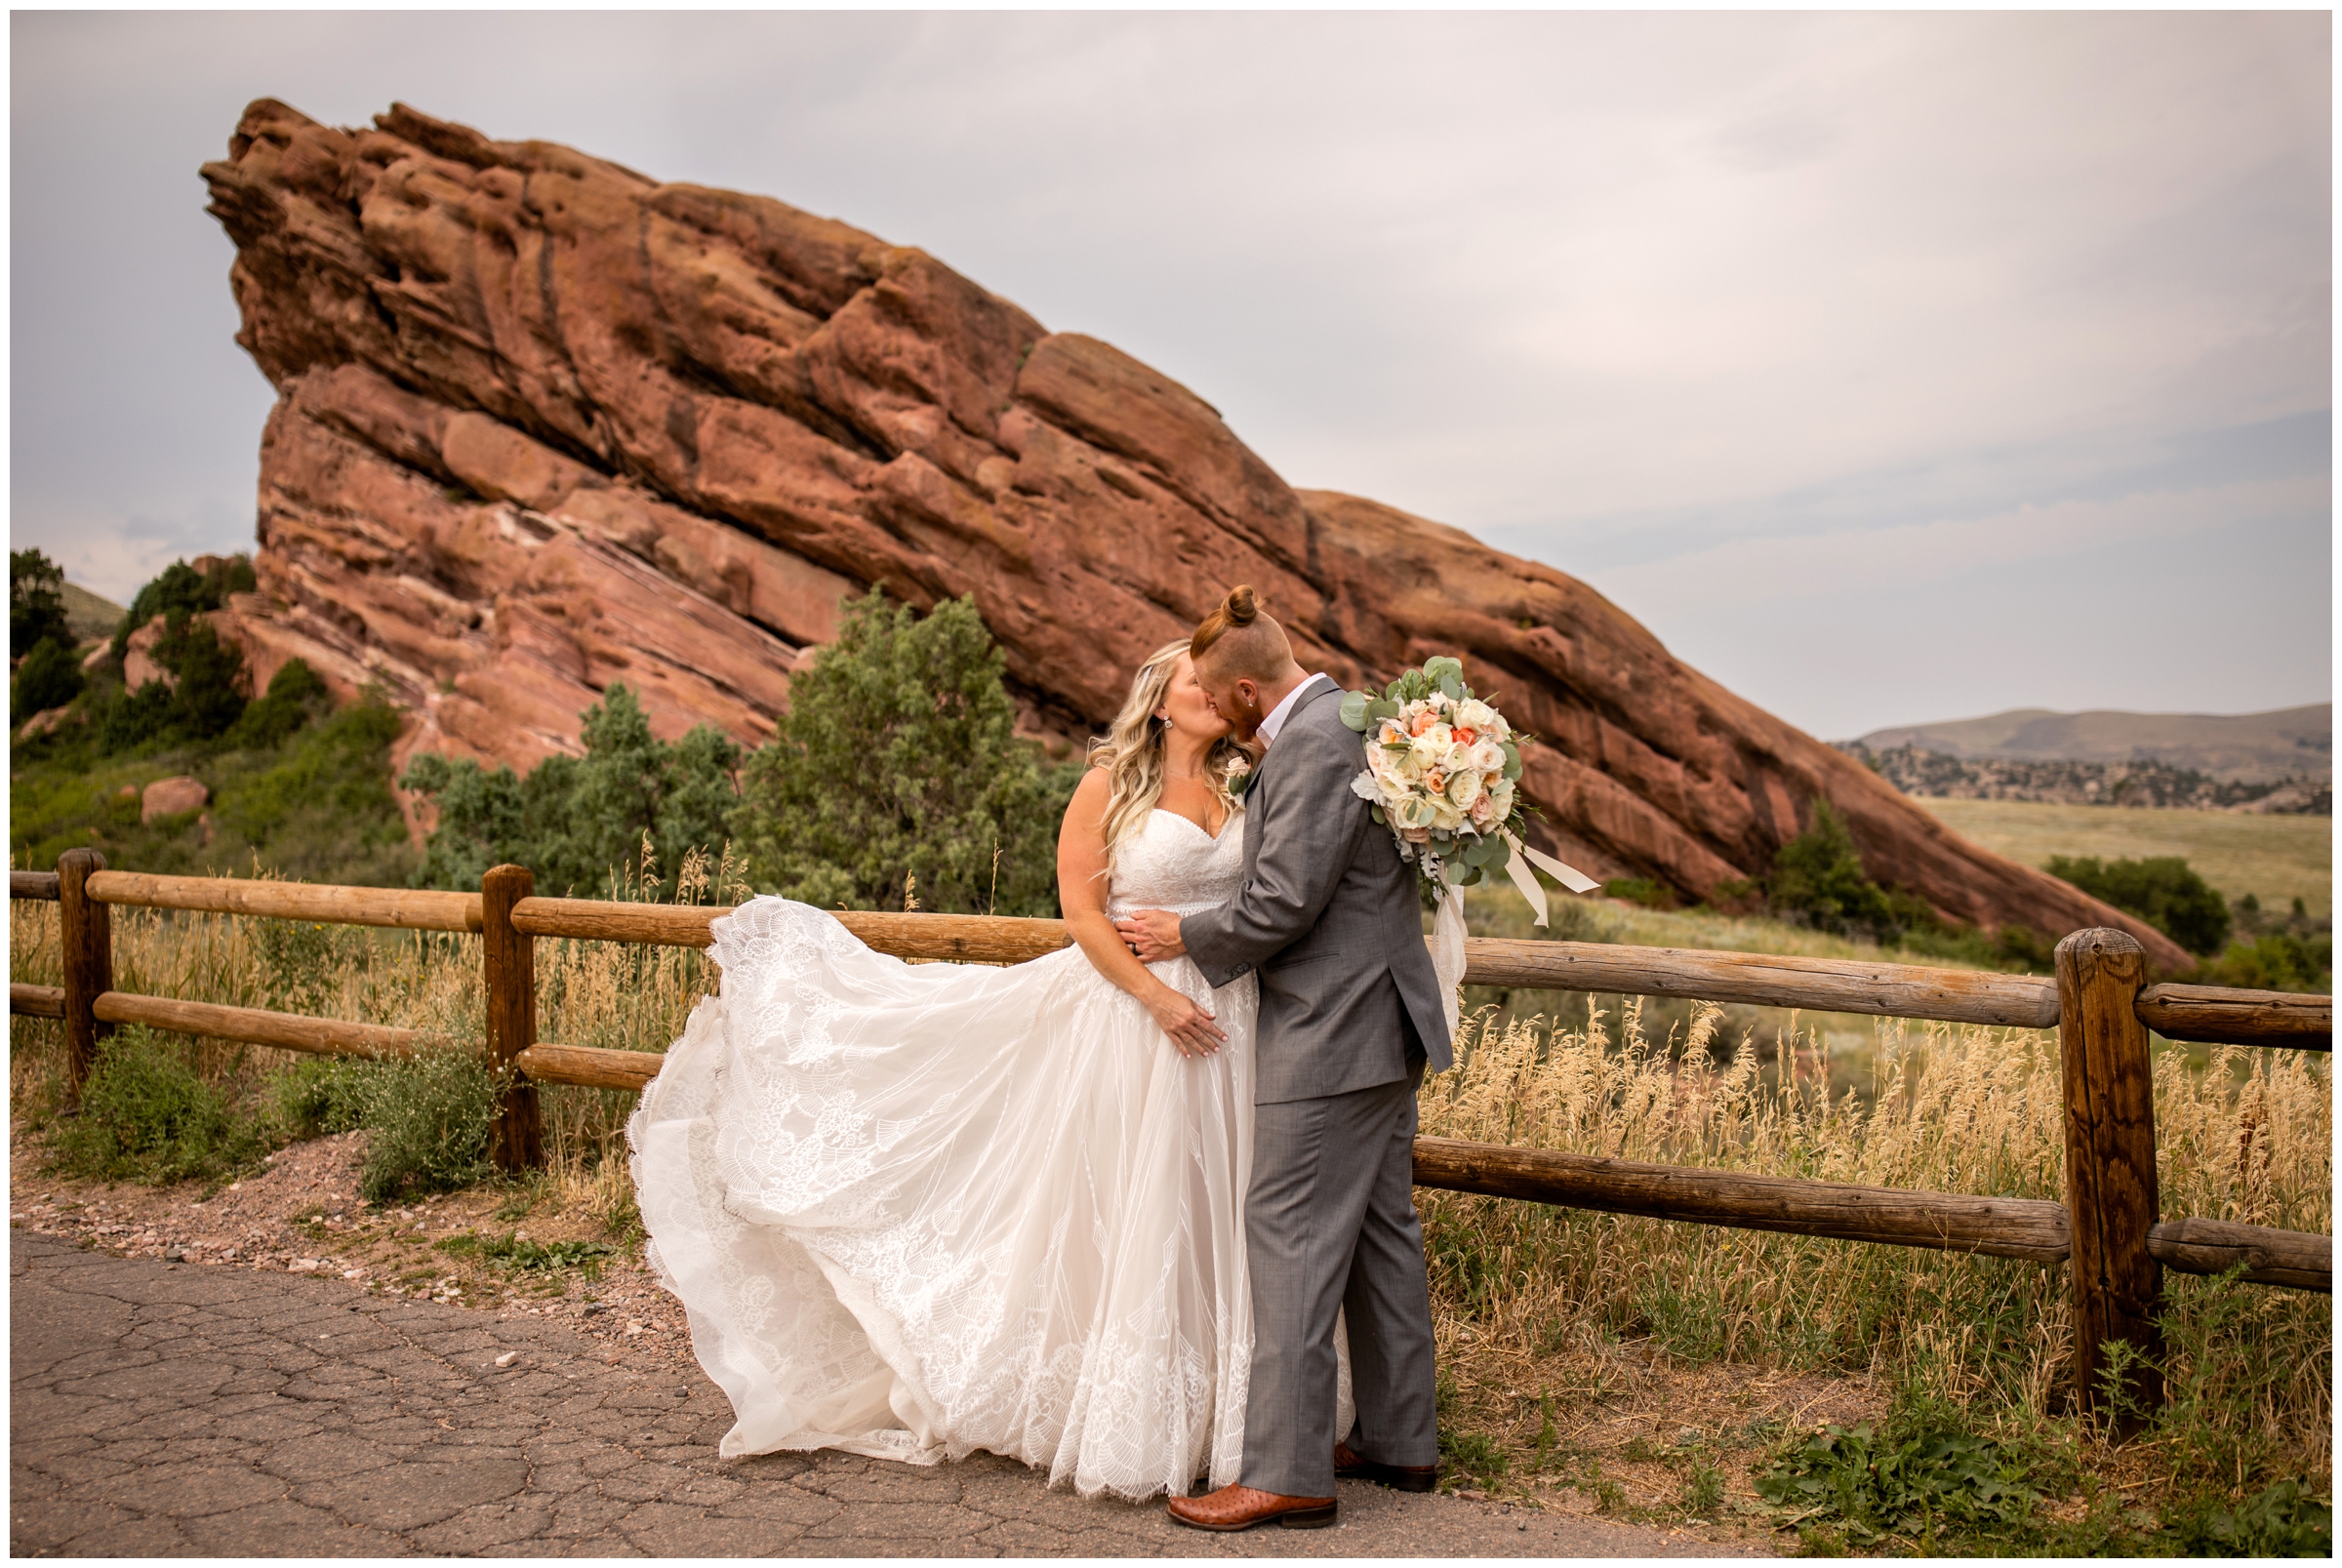 Red rocks Colorado elopement wedding inspiration by plum pretty photos 